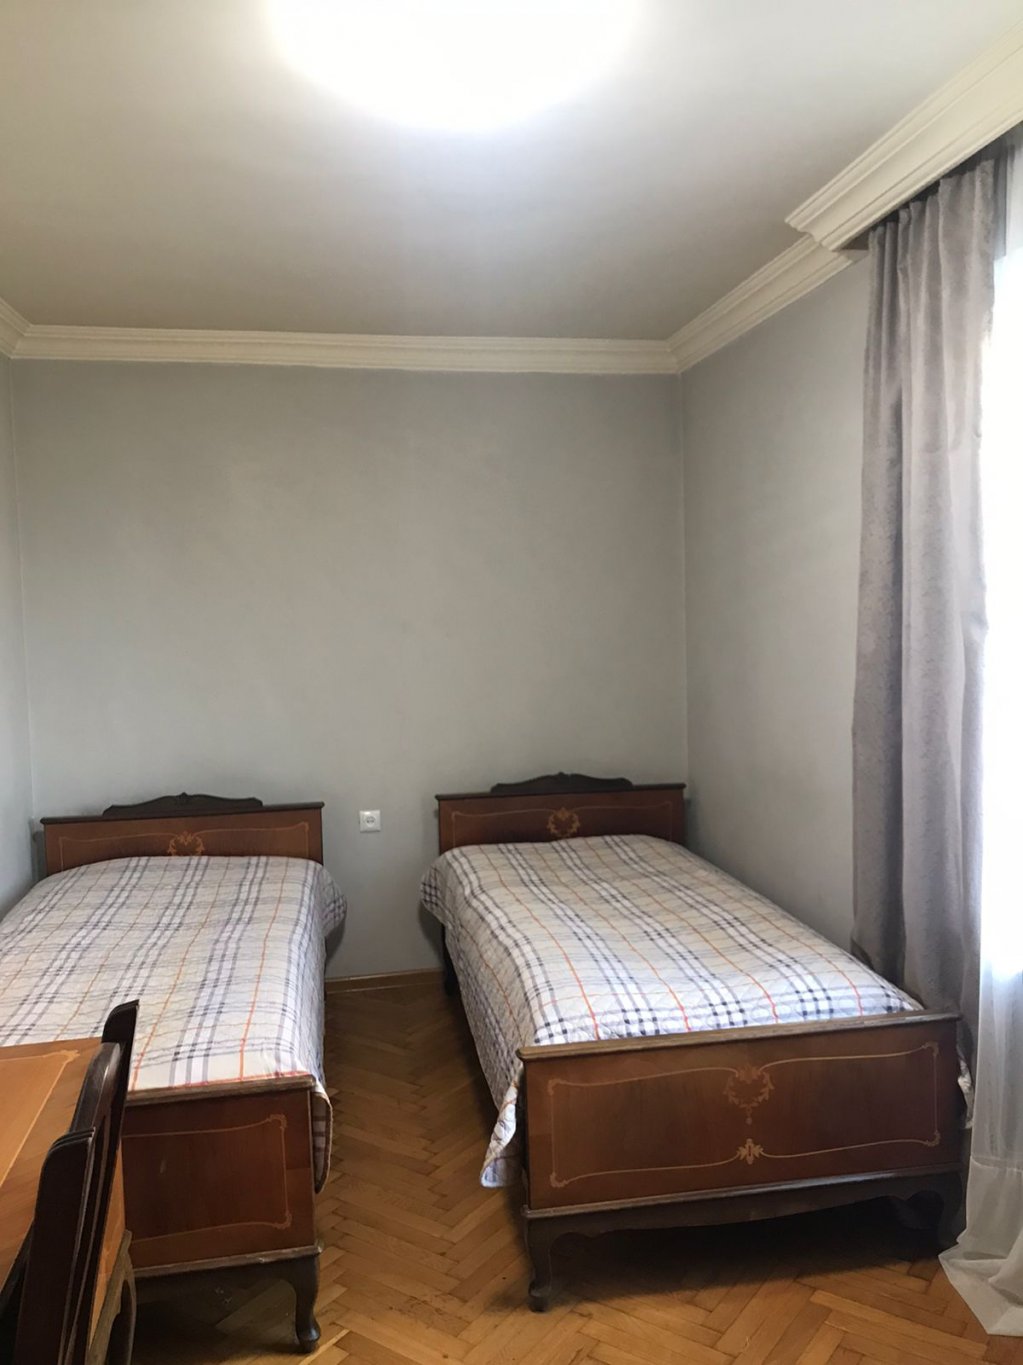 Rent two-bedroom apartment in the center of Batumi id-116 - Batumi Vacation Rentals